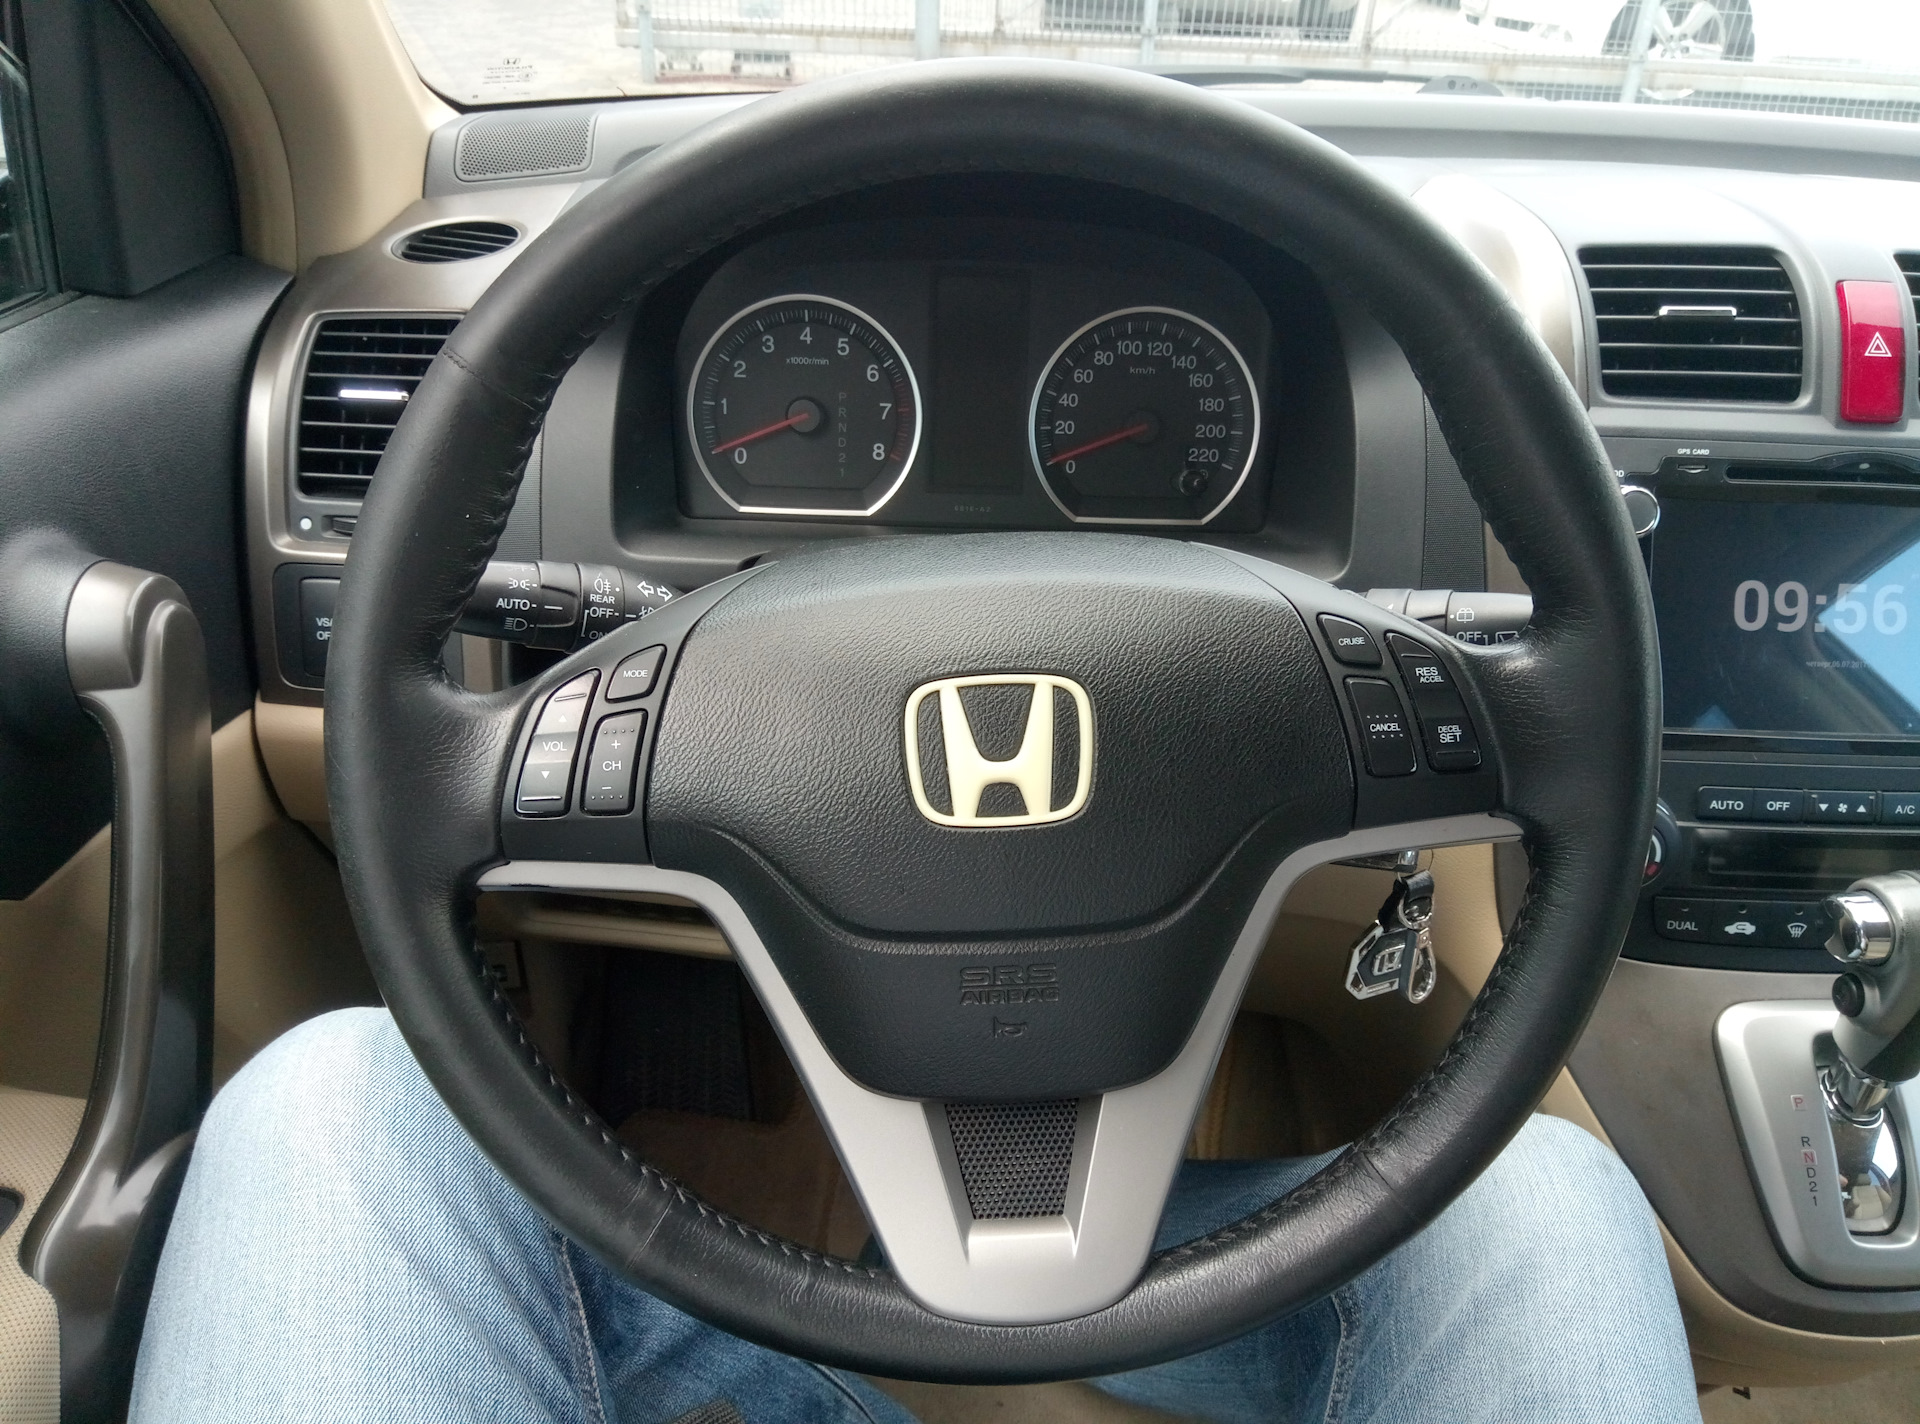 Honda crv руль. Honda CRV 2008 руль. Руль Honda CR-V 4. Руль Honda CRV. Руль Honda CRV 2.